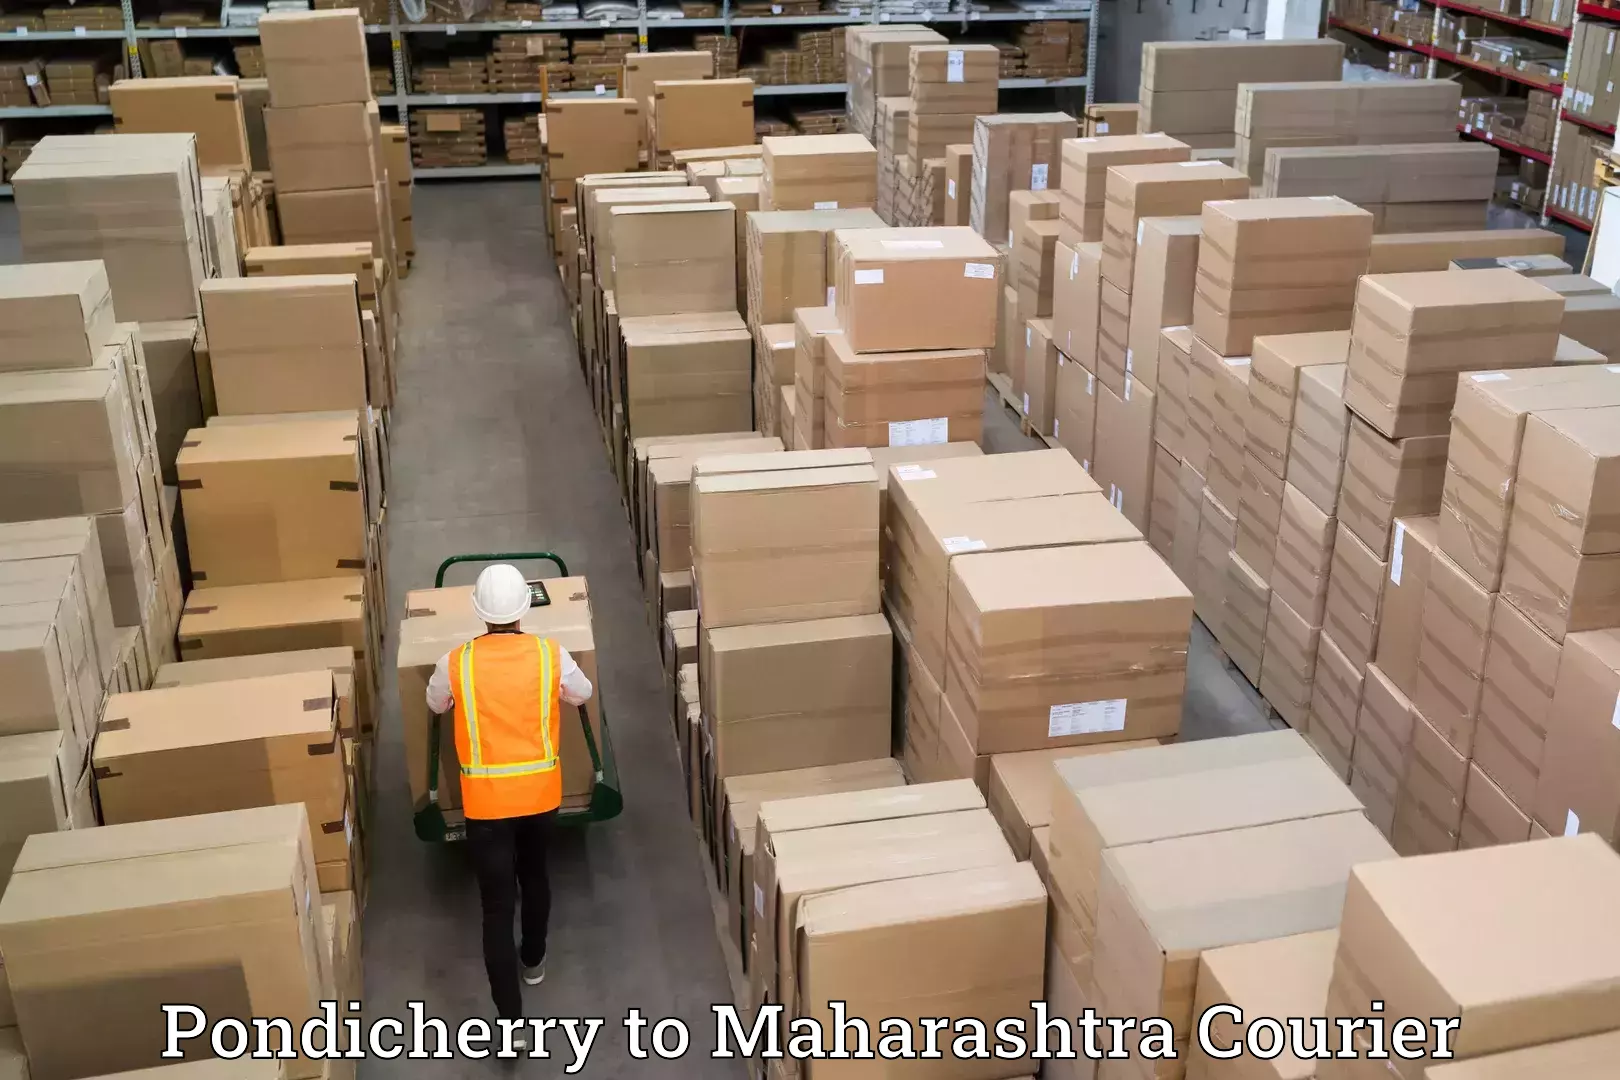 Furniture delivery service Pondicherry to Maharashtra